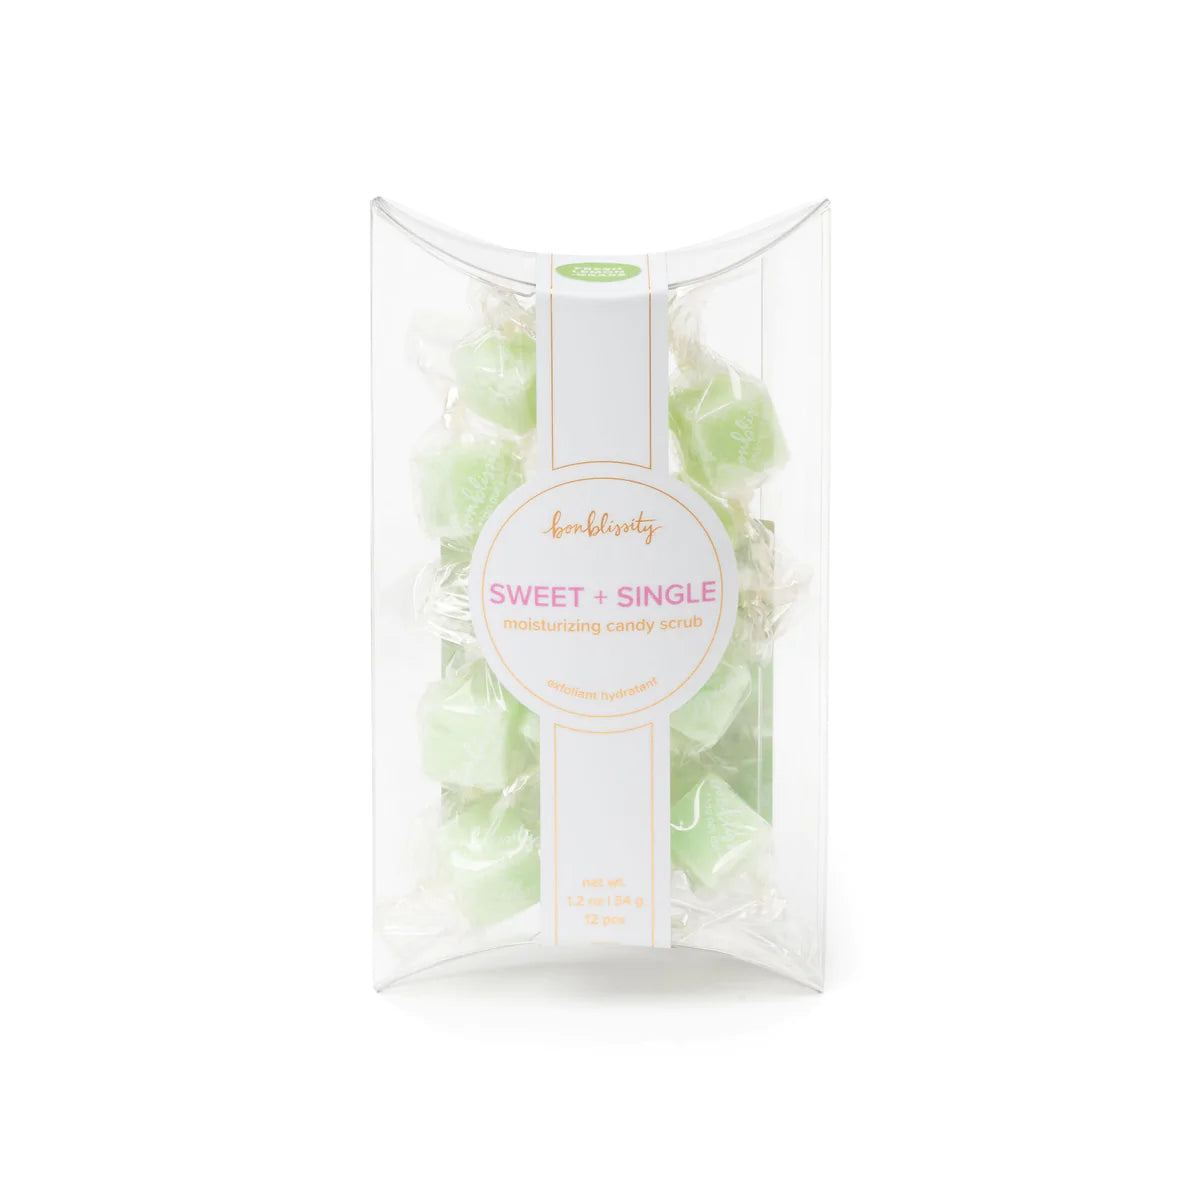 Mini Me Sweet + Single Candy Scrub: Fresh Lemongrass